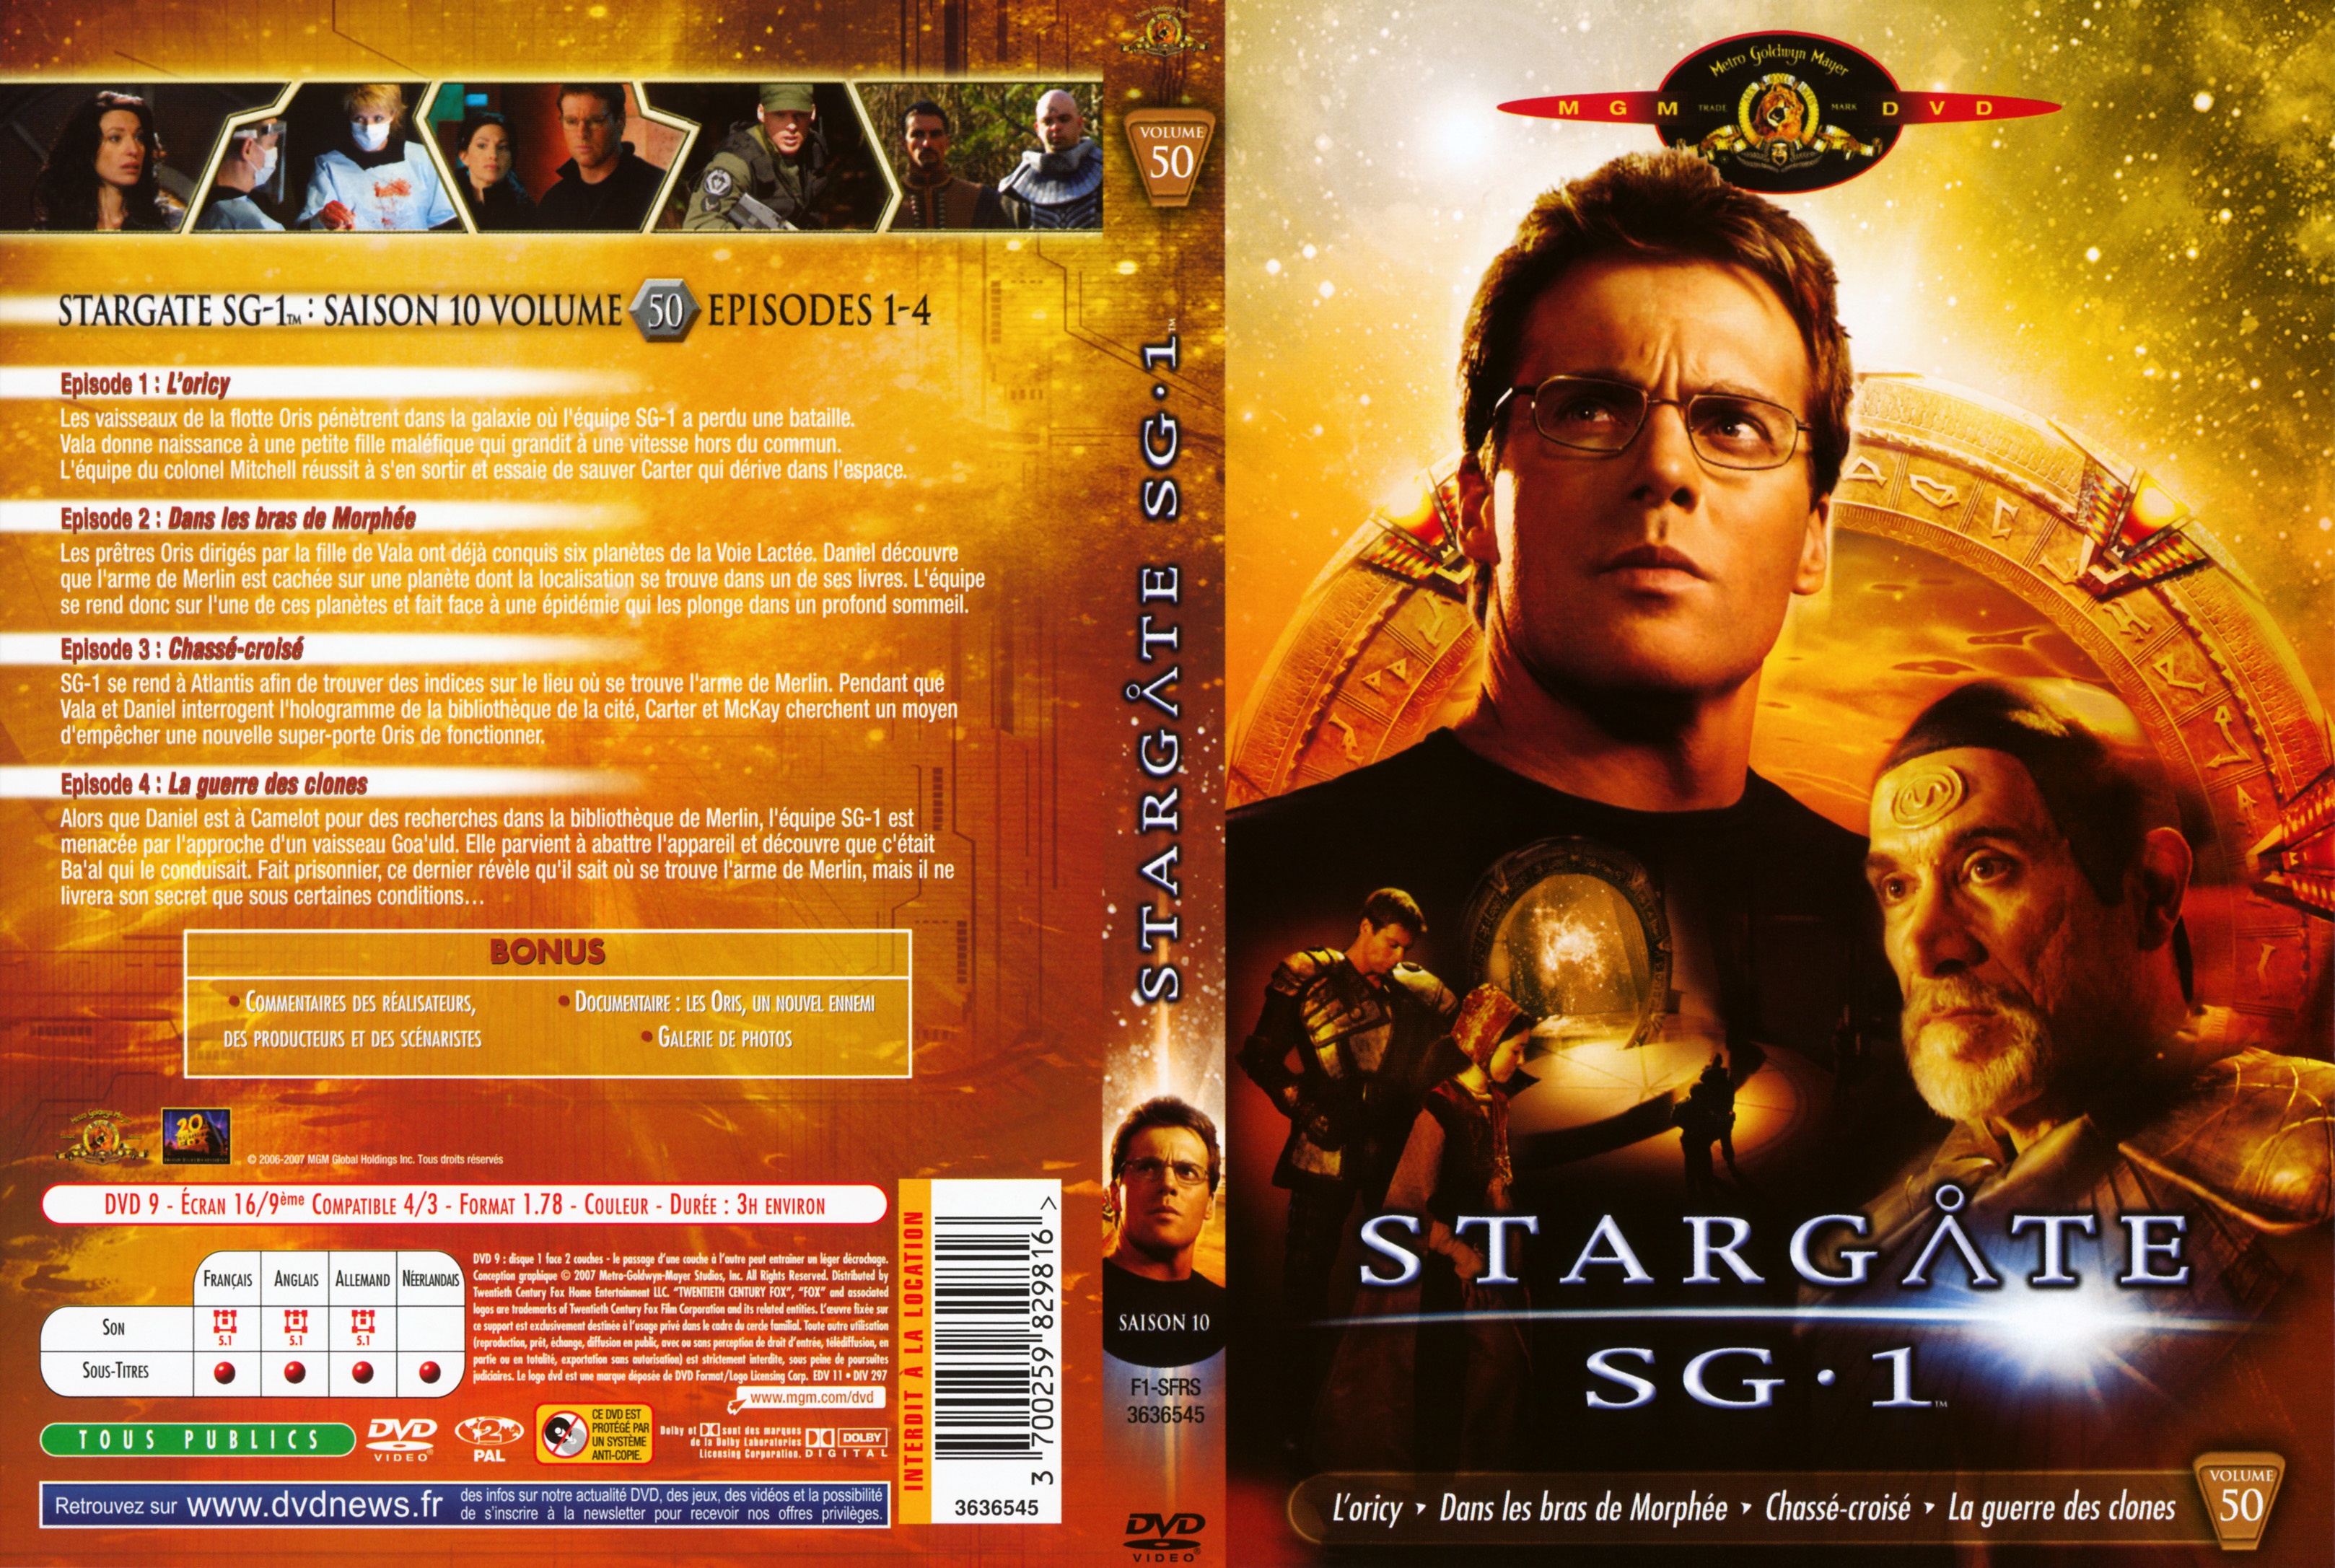 Jaquette DVD Stargate SG1 vol 50